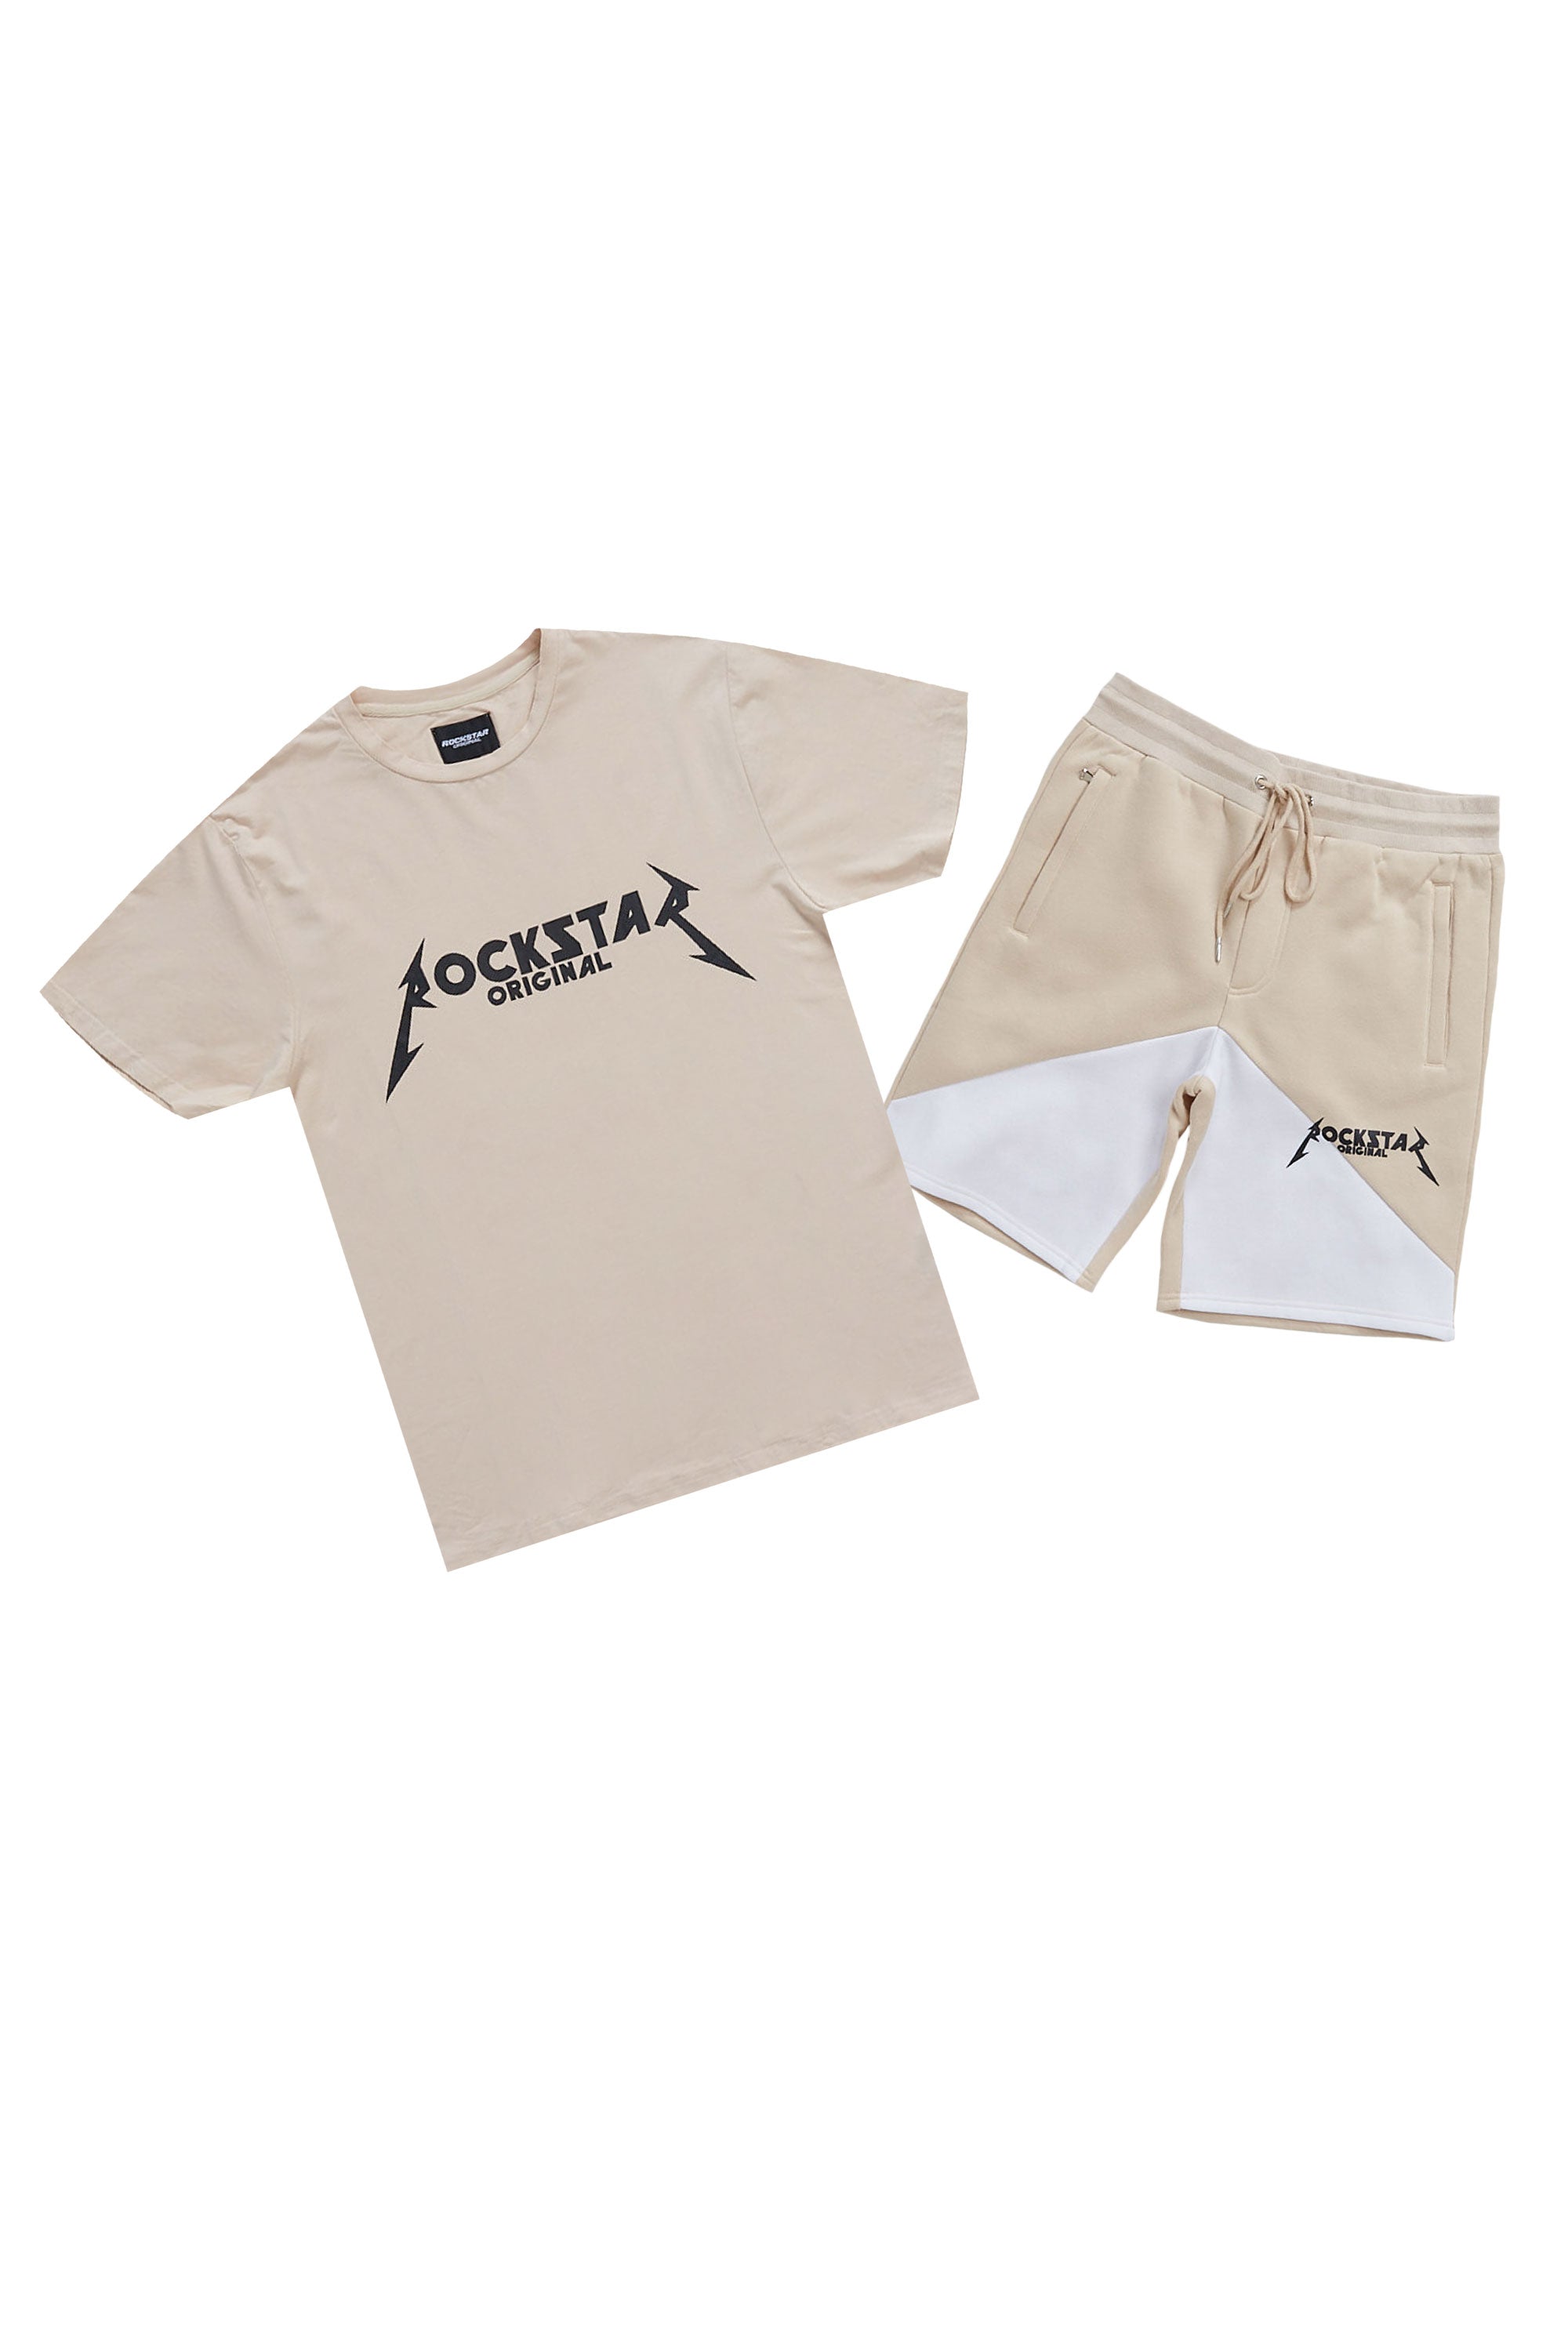 Men's Shirt and Short Set: Matching Two Piece Shirts and Shorts